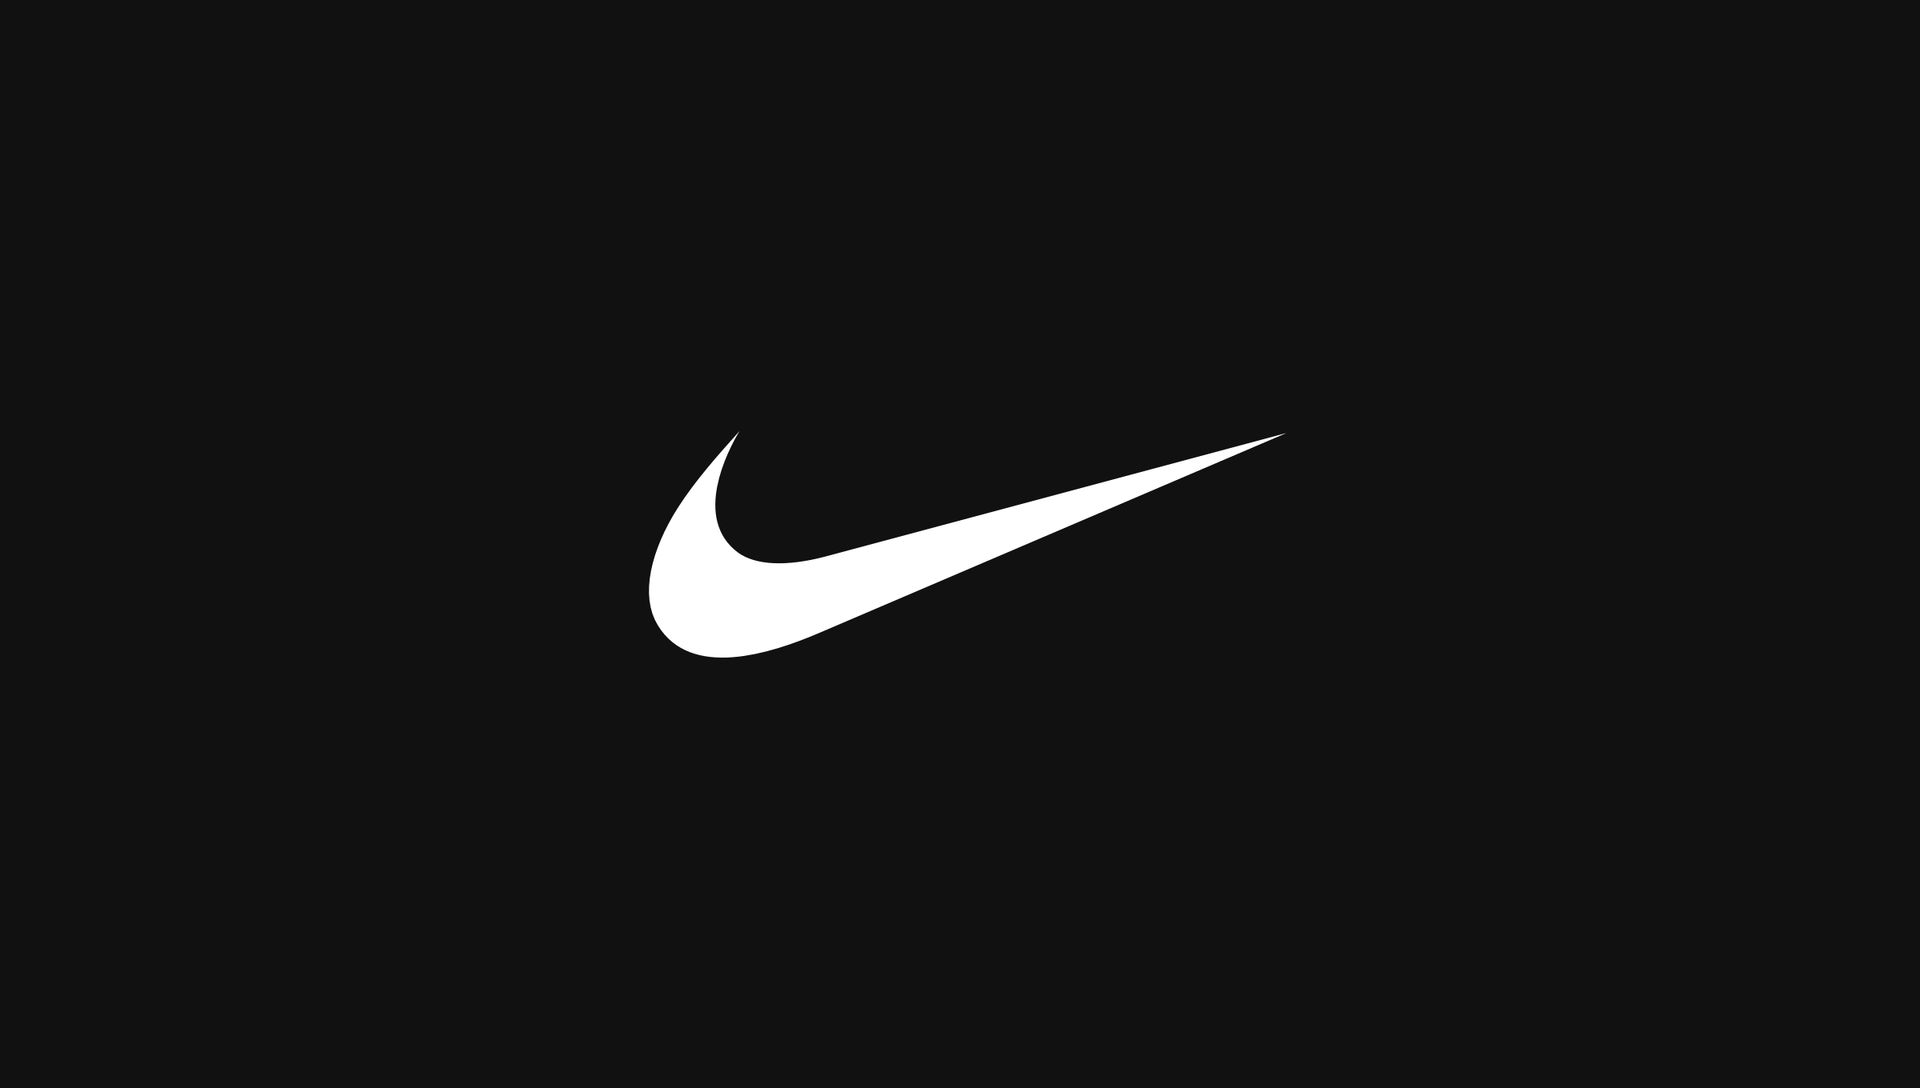 US Football. Nike.com